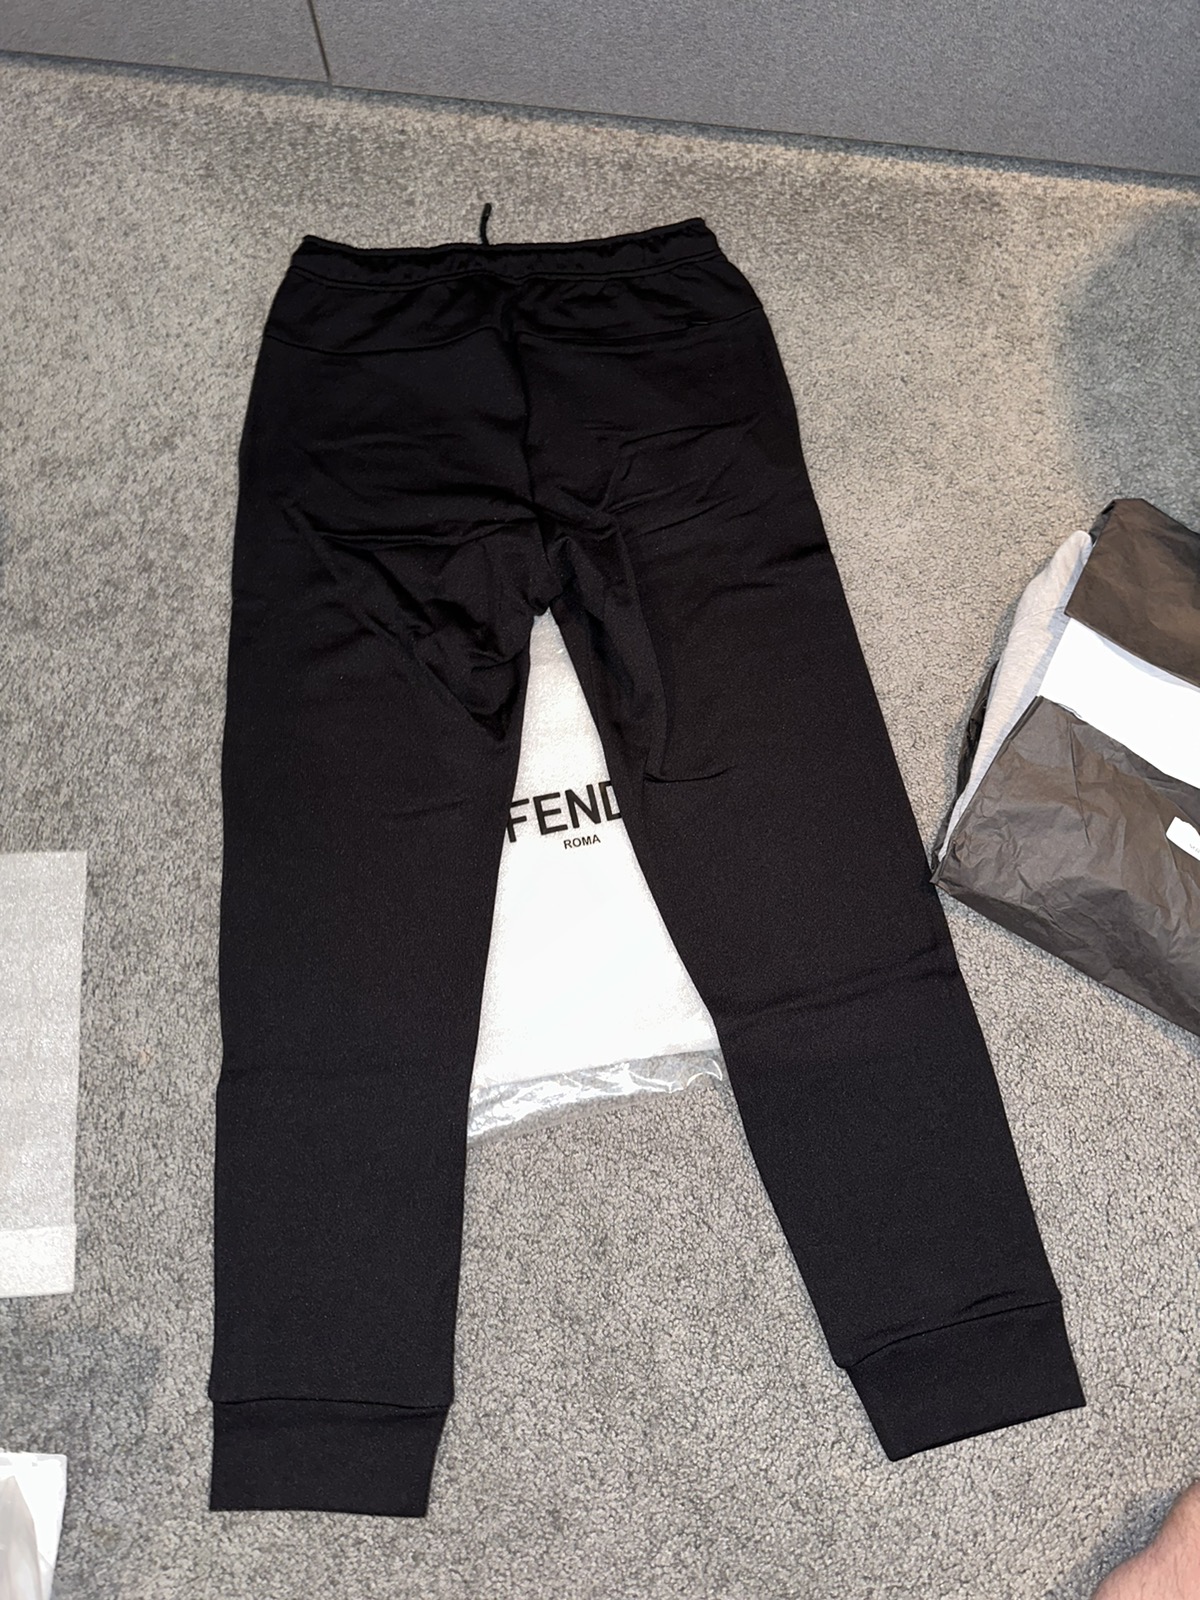 Fendi Mesh Logo Sweatpants - Size 50 - Brand New With Tags! - 5